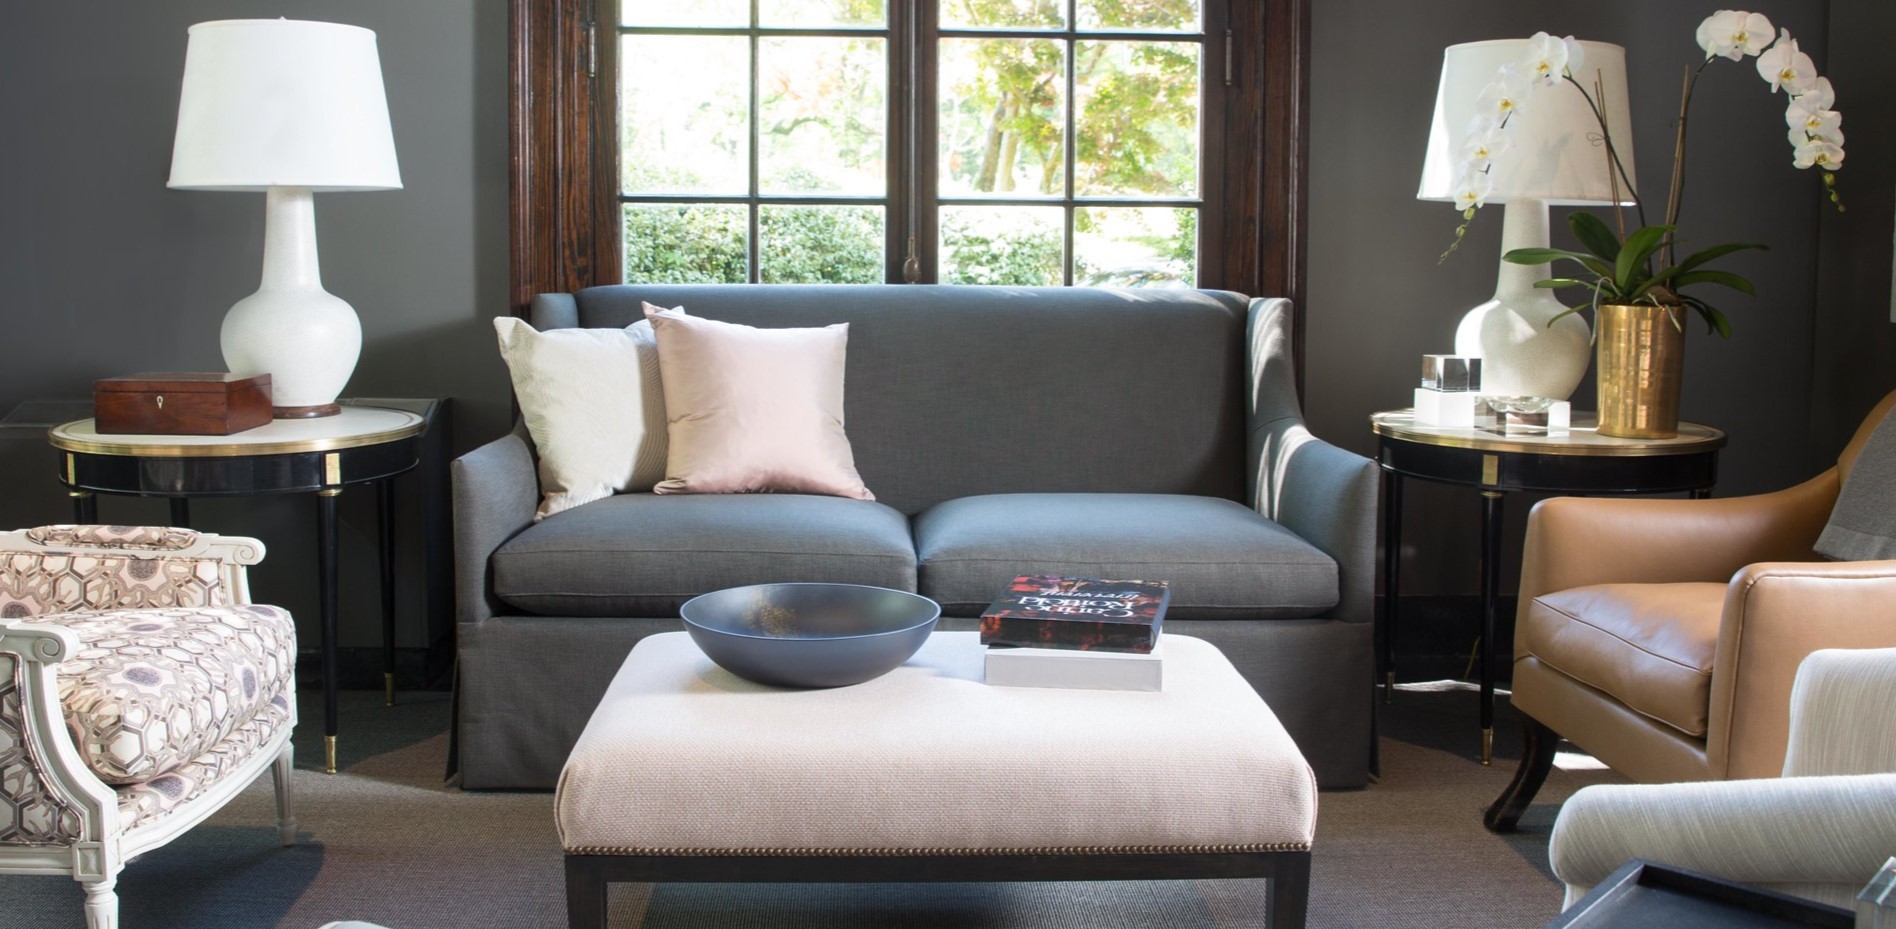 Синий диван можно дополнить белыми декоративными подушками